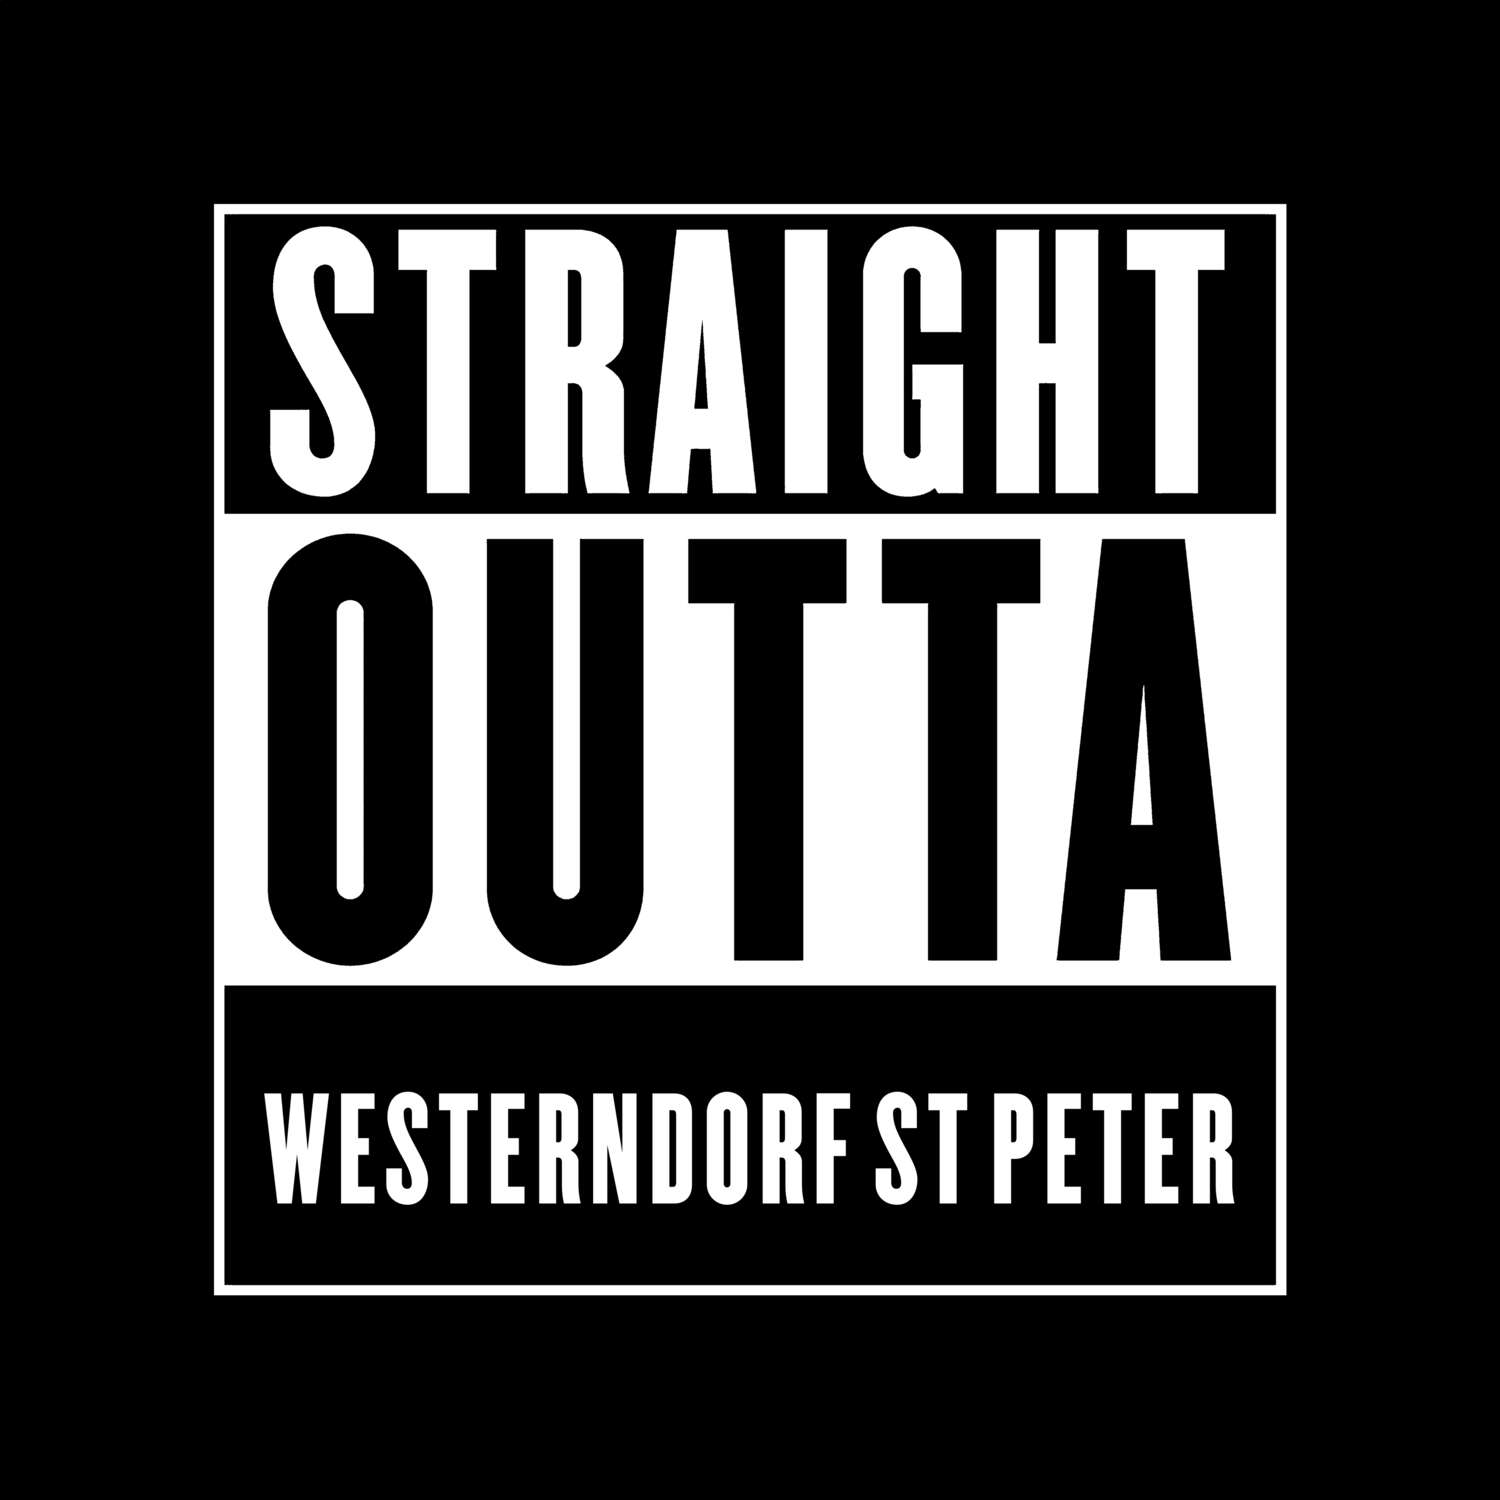 Westerndorf St Peter T-Shirt »Straight Outta«